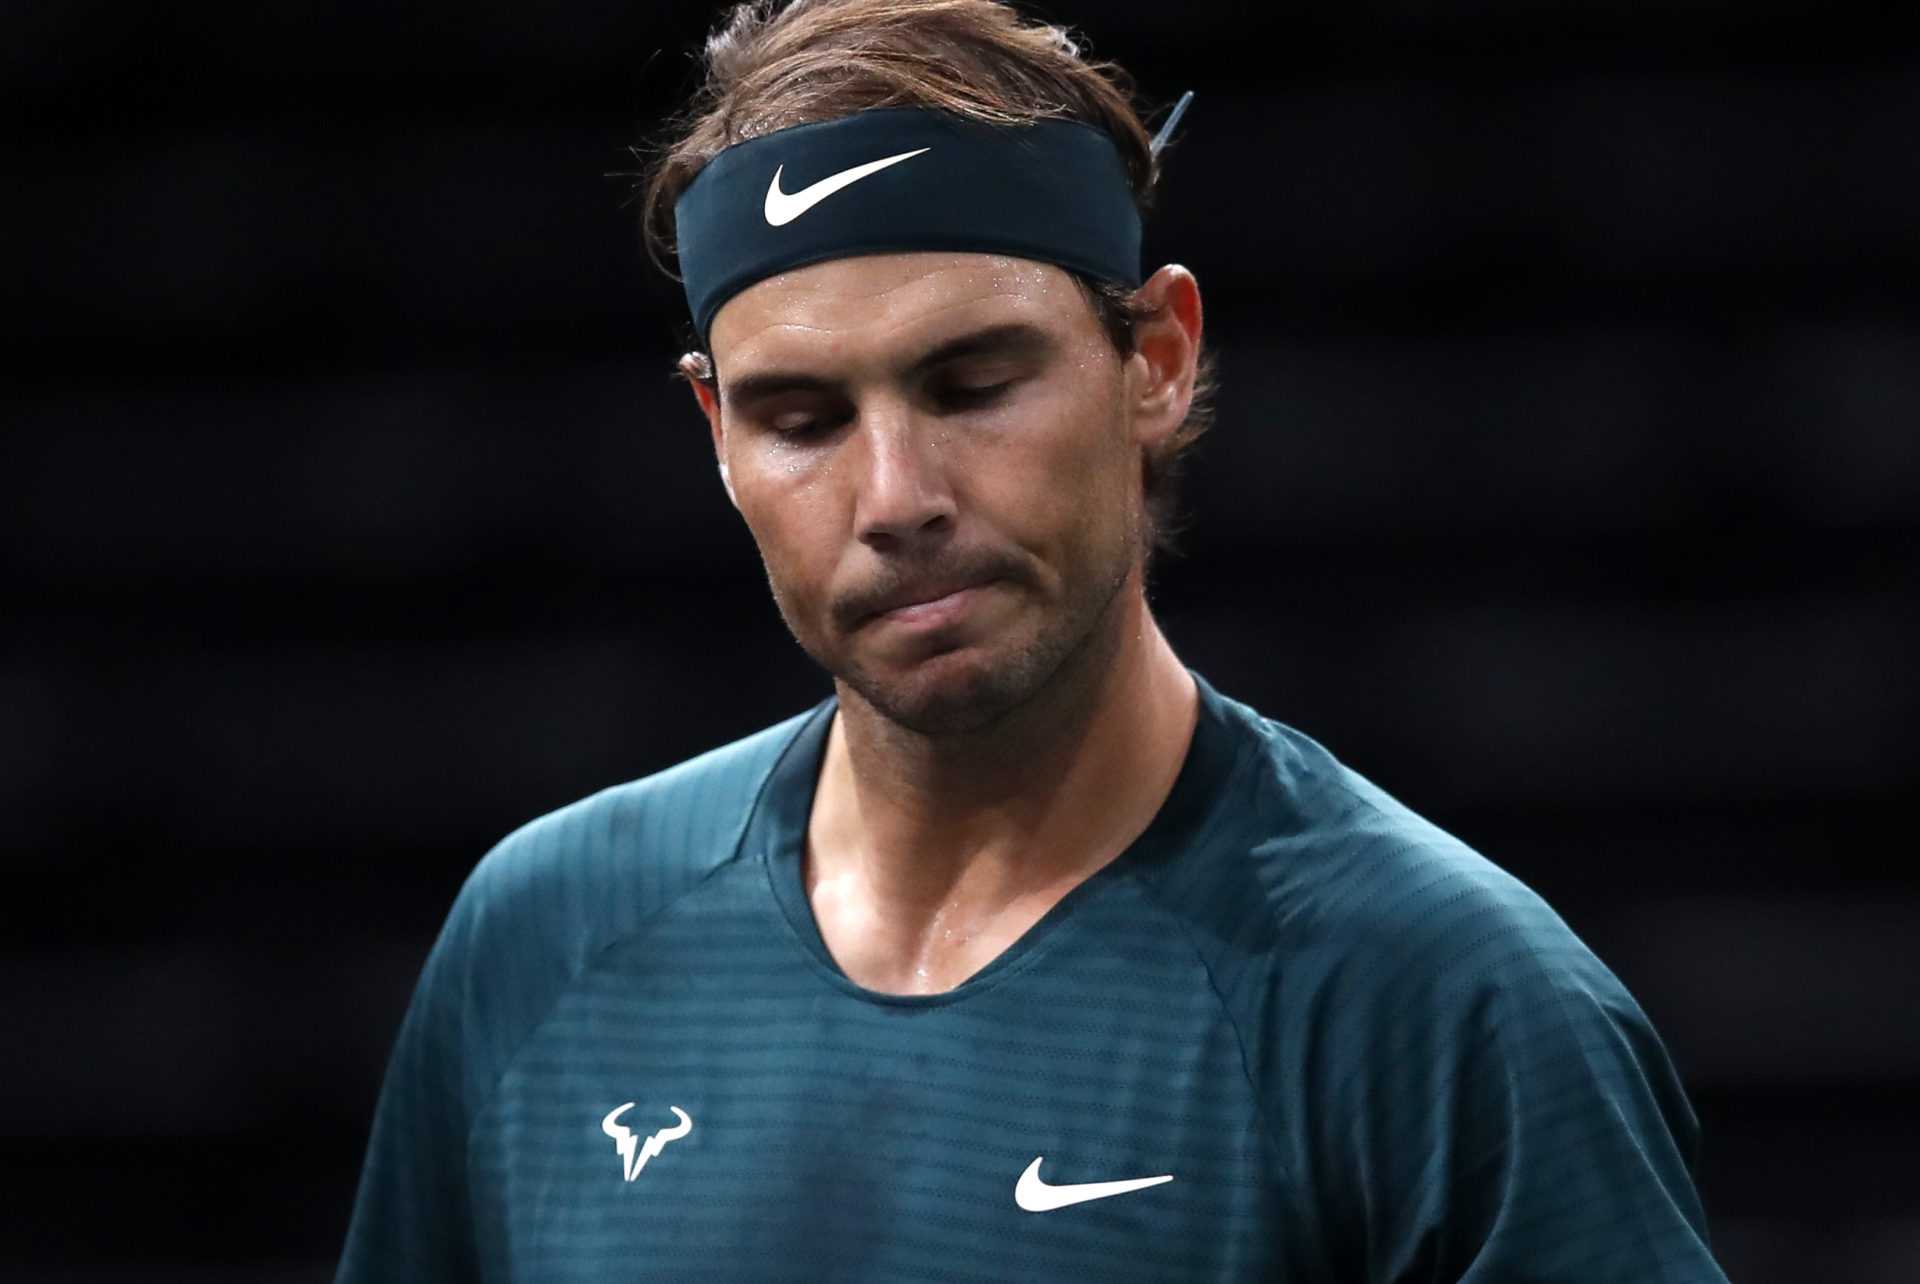 Rafael Nadal déçu - Paris Masters 1000